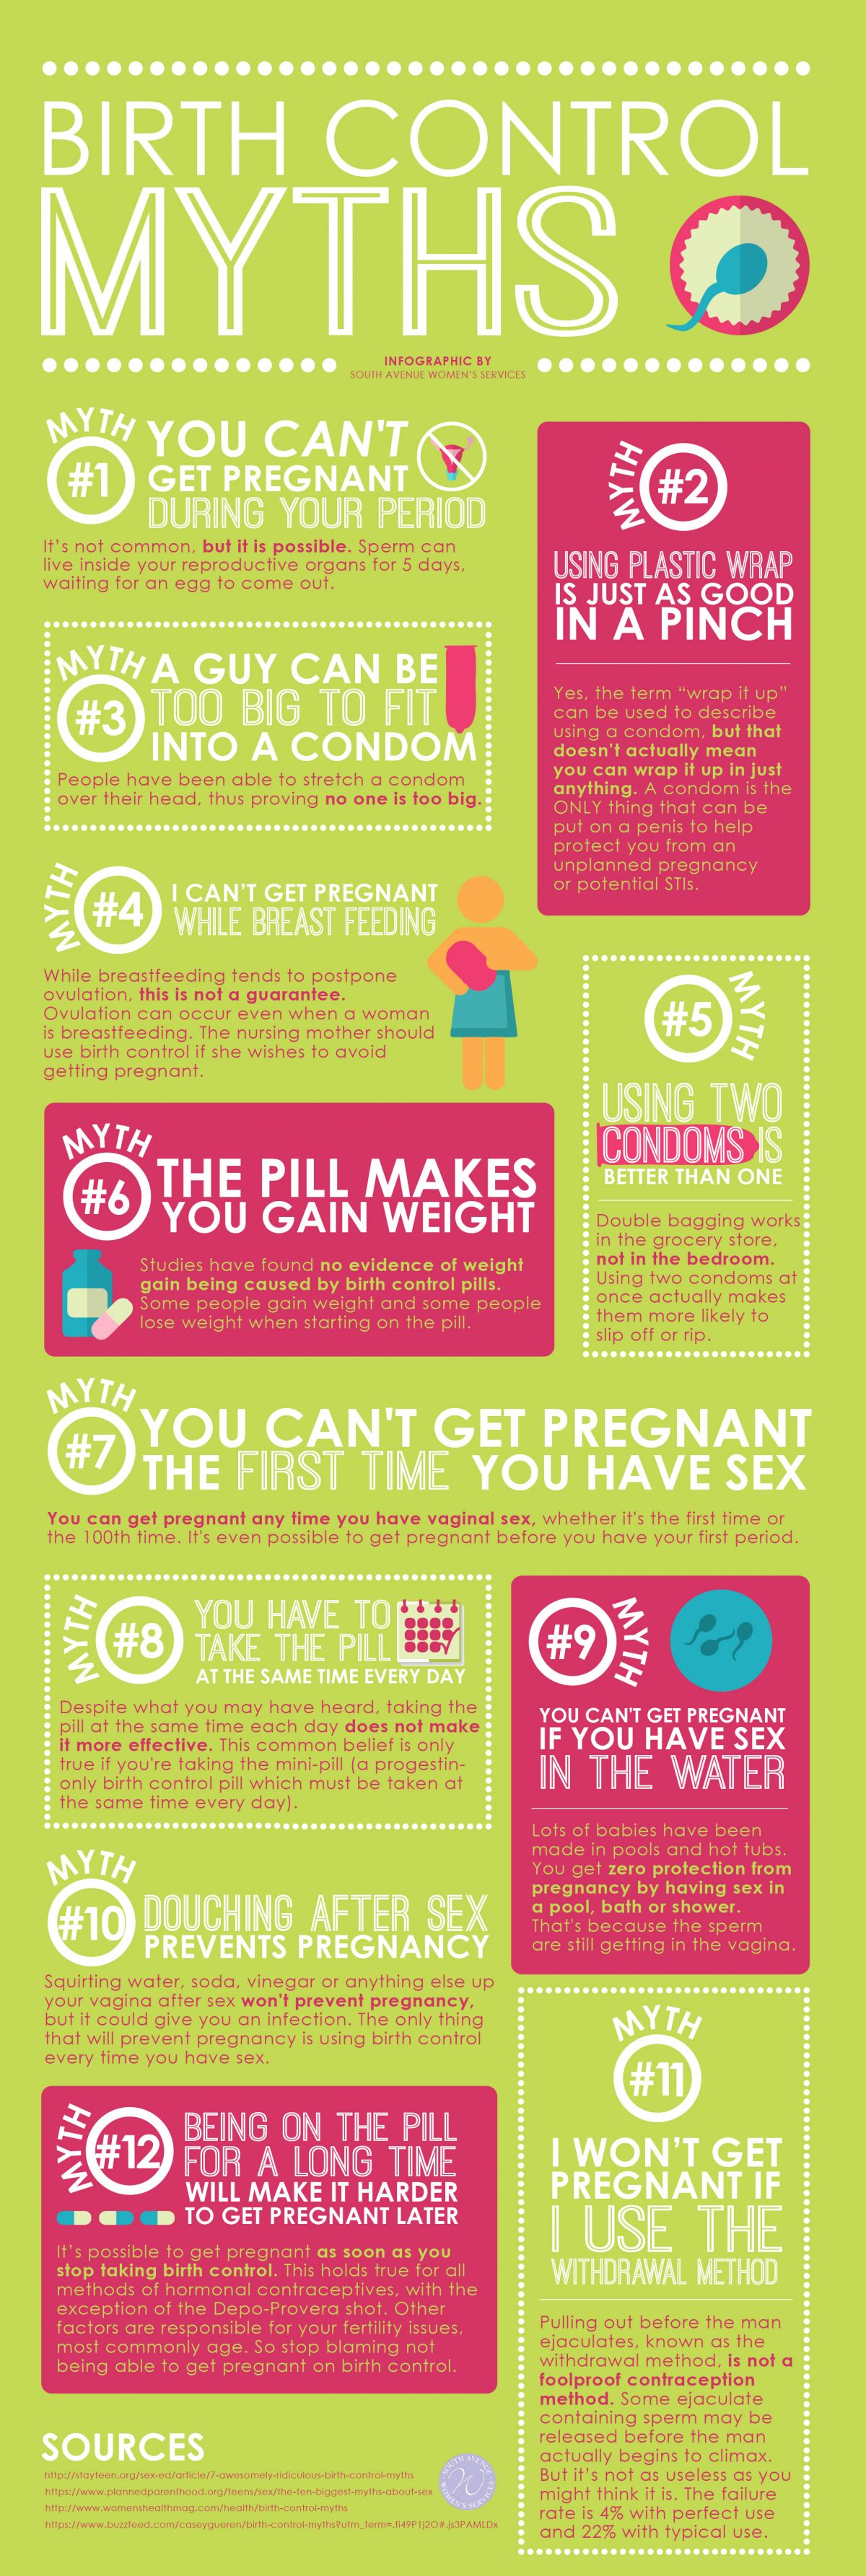 birth control myths infographic